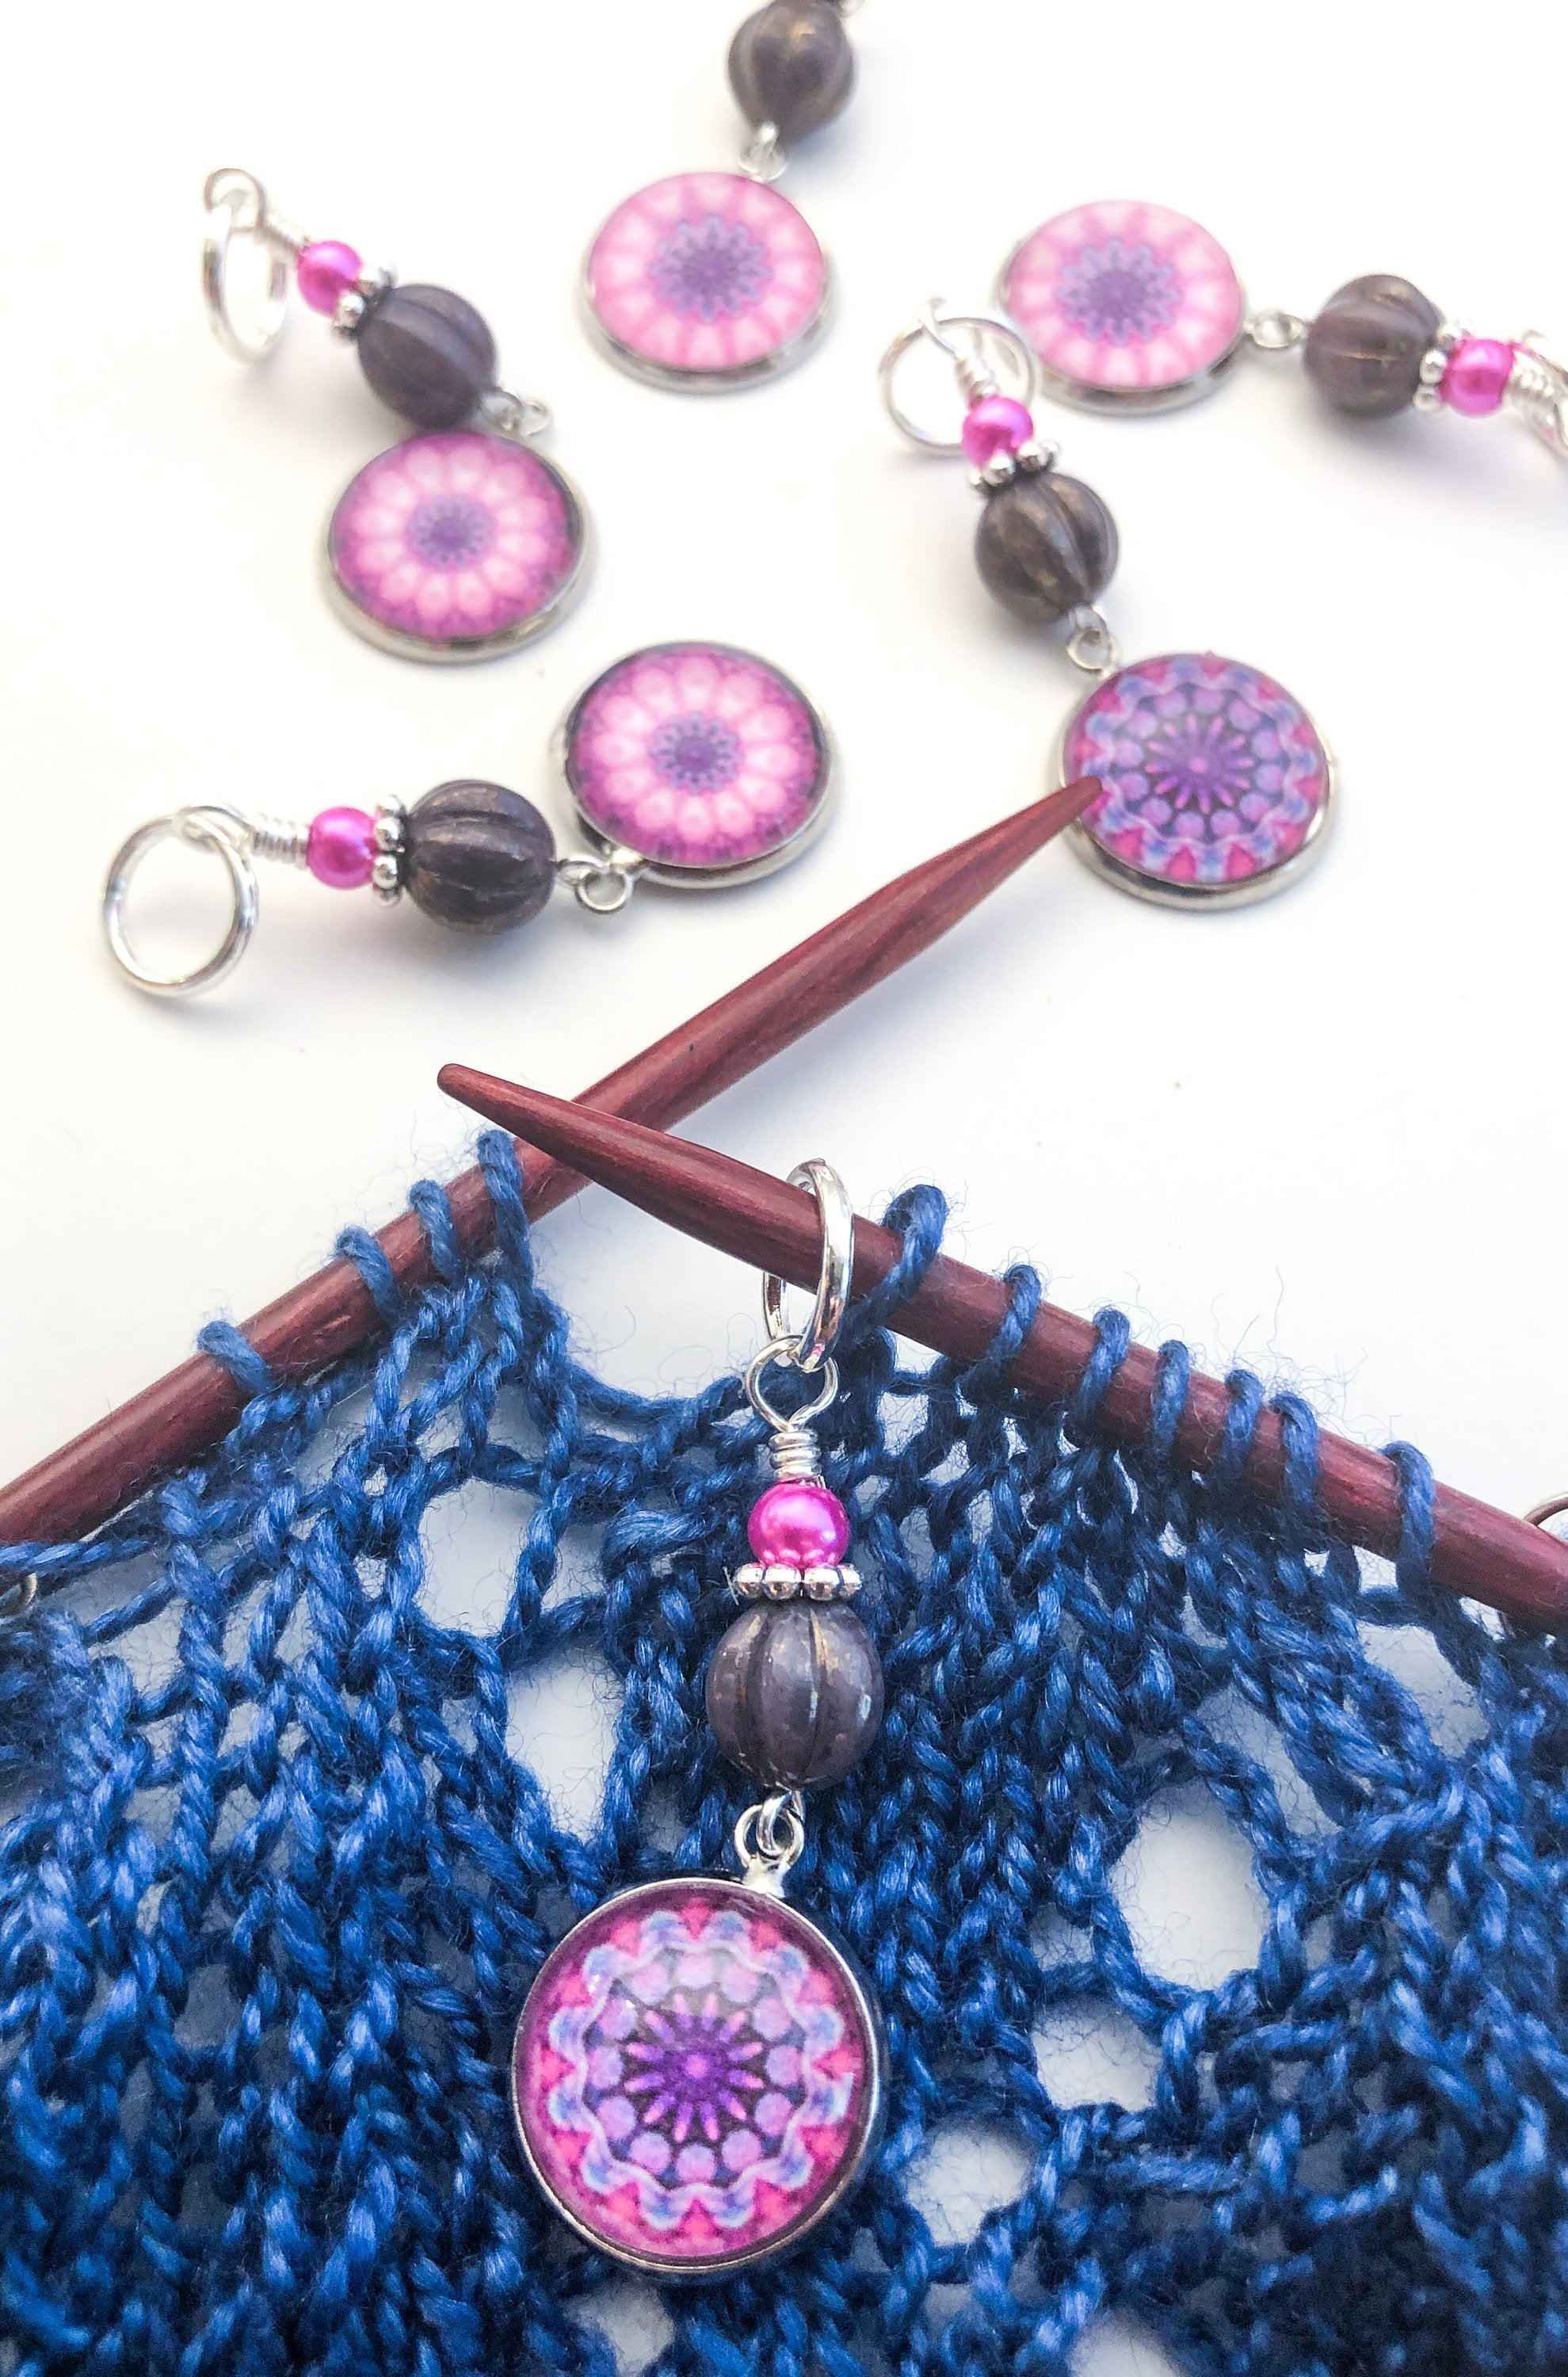 Mandala Print Stitch Markers for Knitting or Crochet